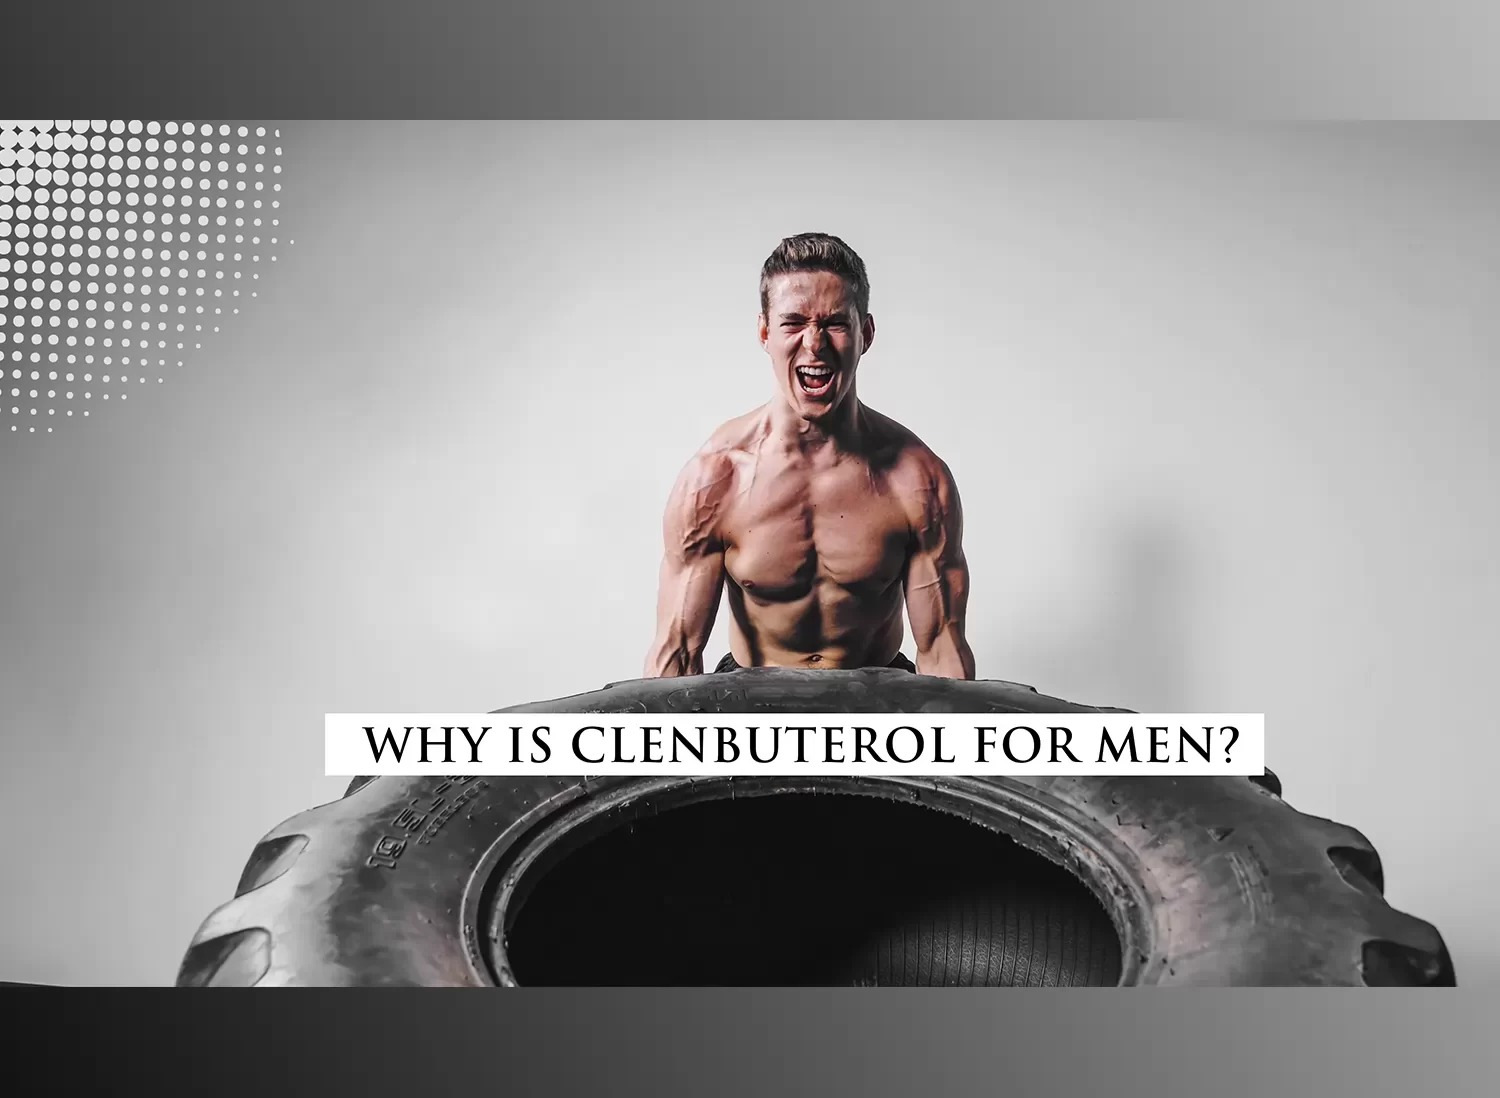 Clenbuterol for men